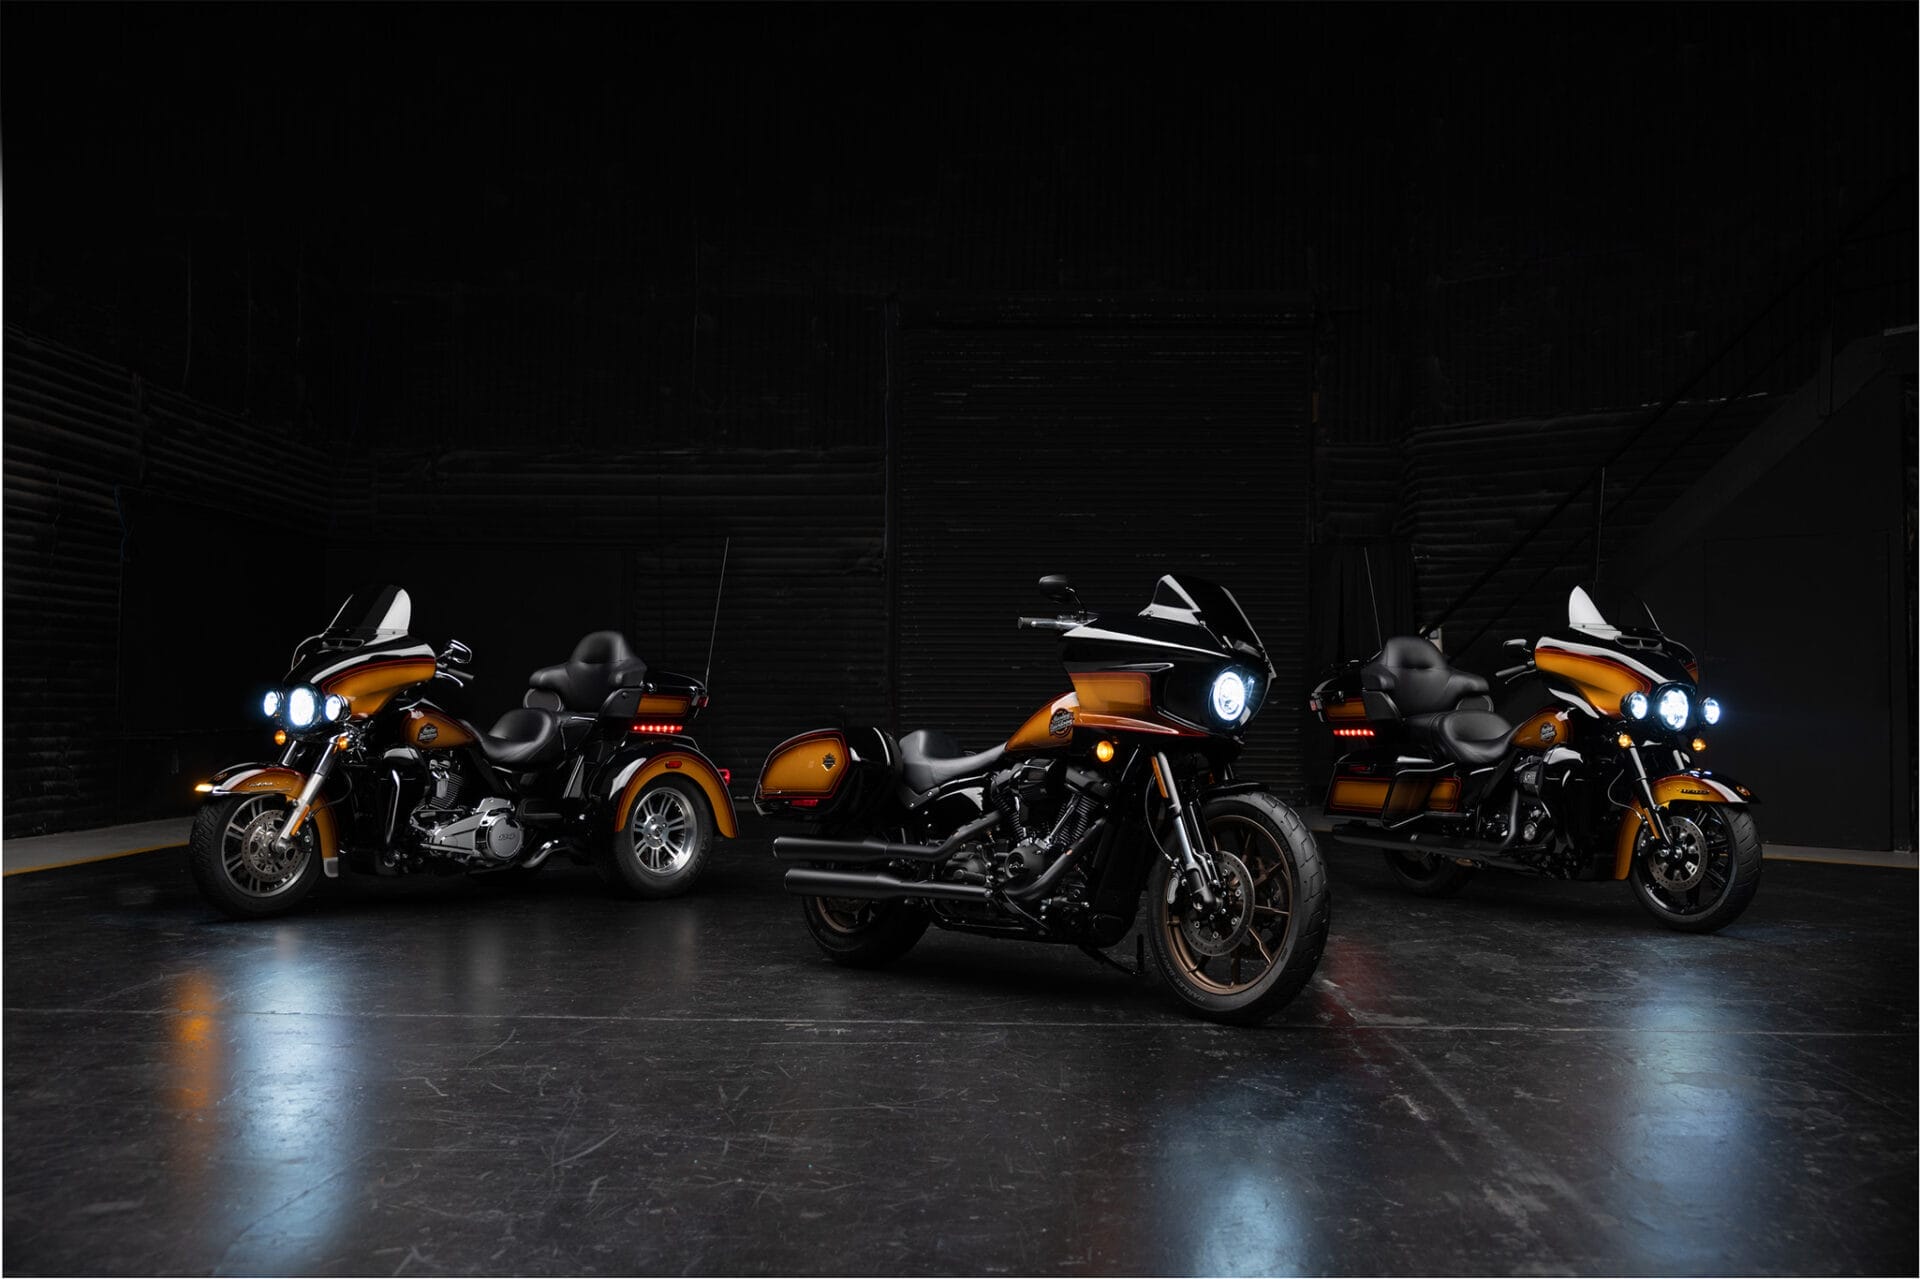 Die Tobacco Fade Enthusiast Motorcycle Collection: Harley-Davidsons Tribut an Musik und Freiheit